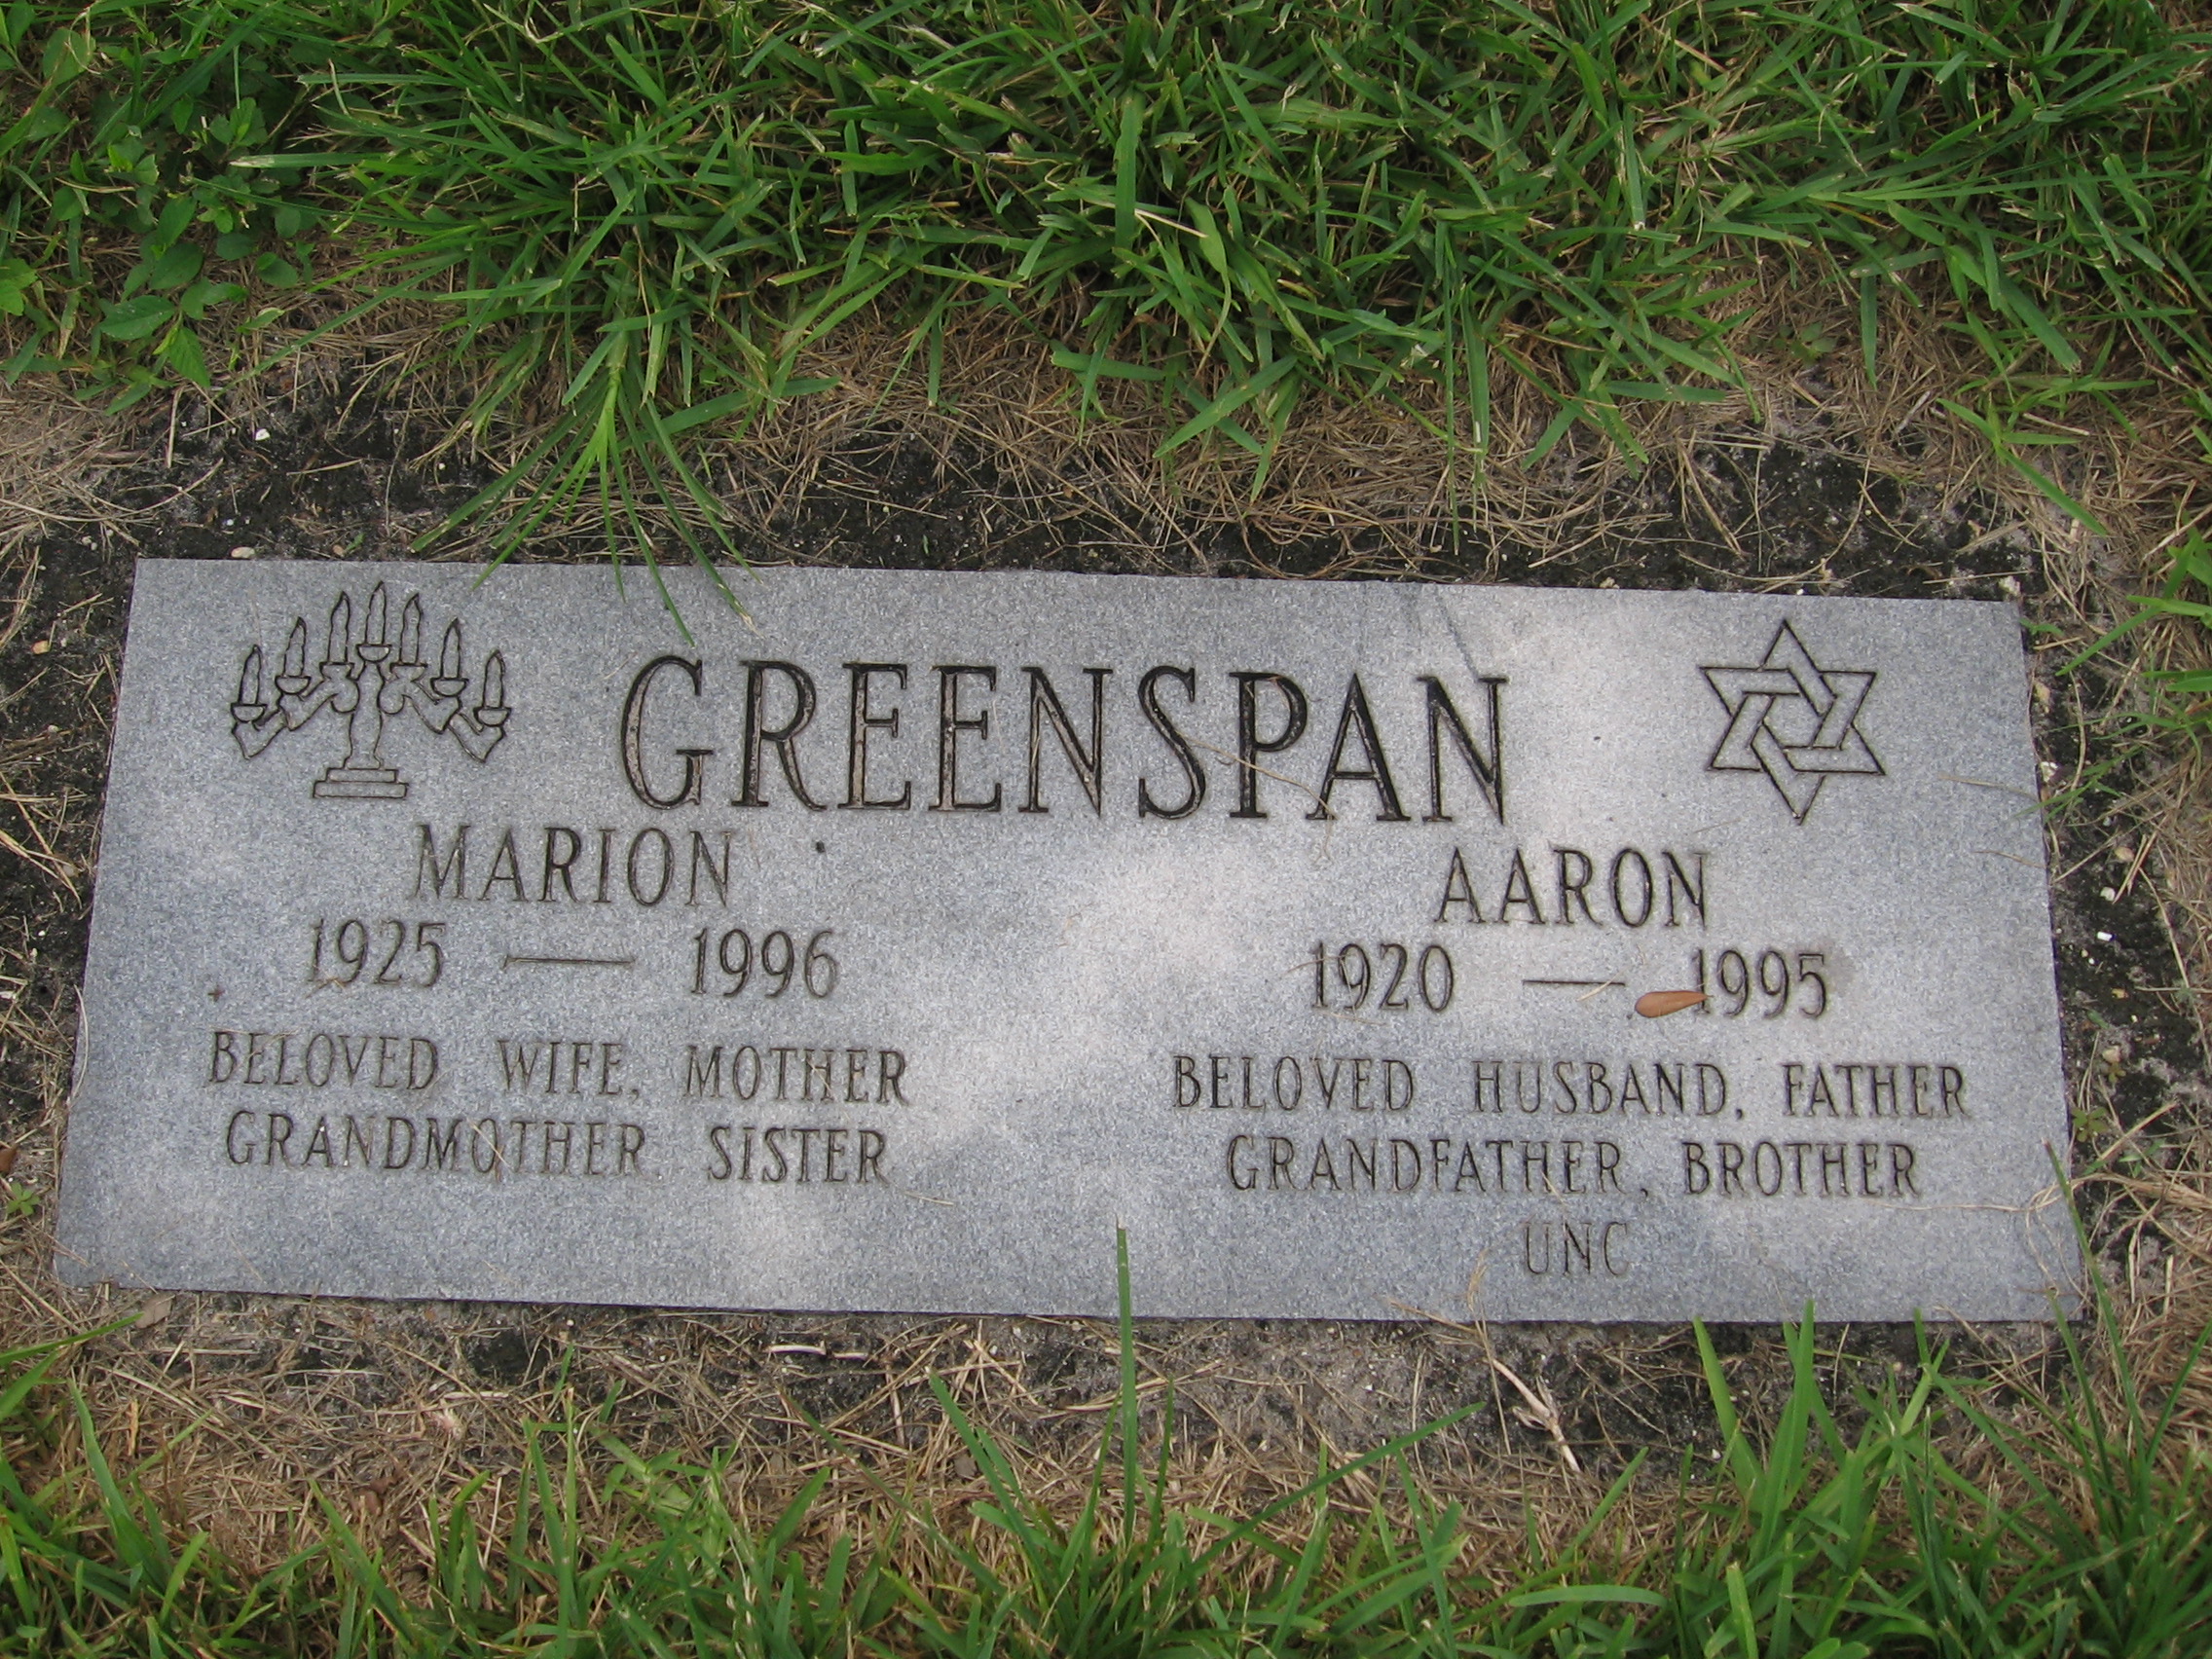 Marion Greenspan